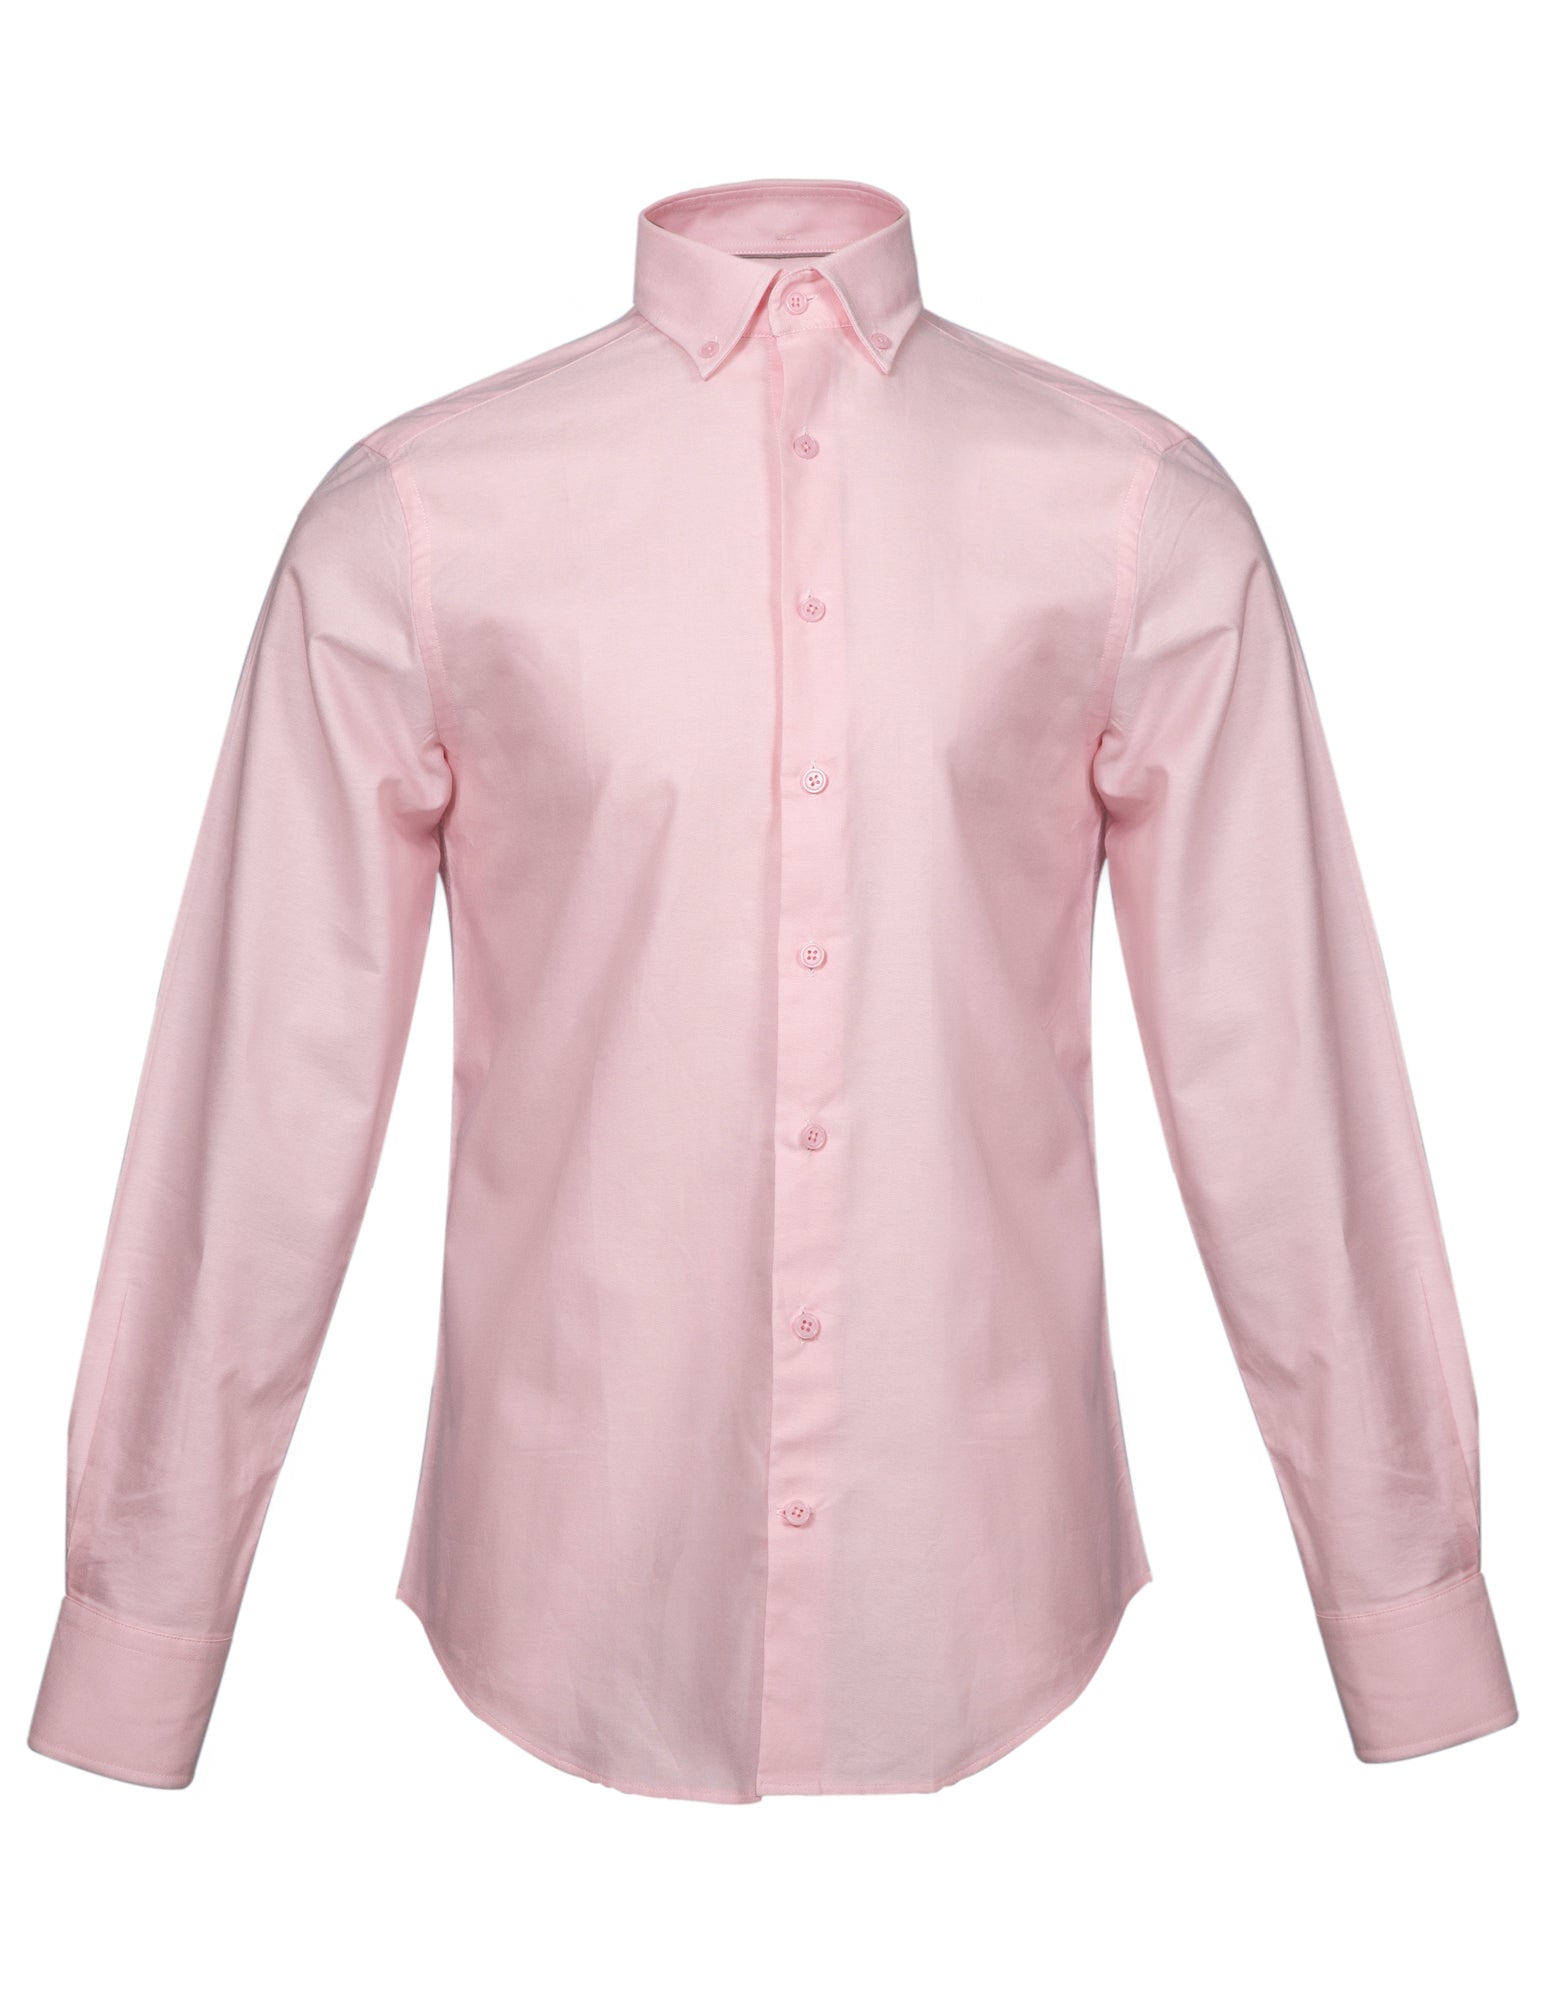 HENRY SARTORIAL Casual Plain Shirt PINK - Henry BucksShirts38AW230084 - PINK - SM